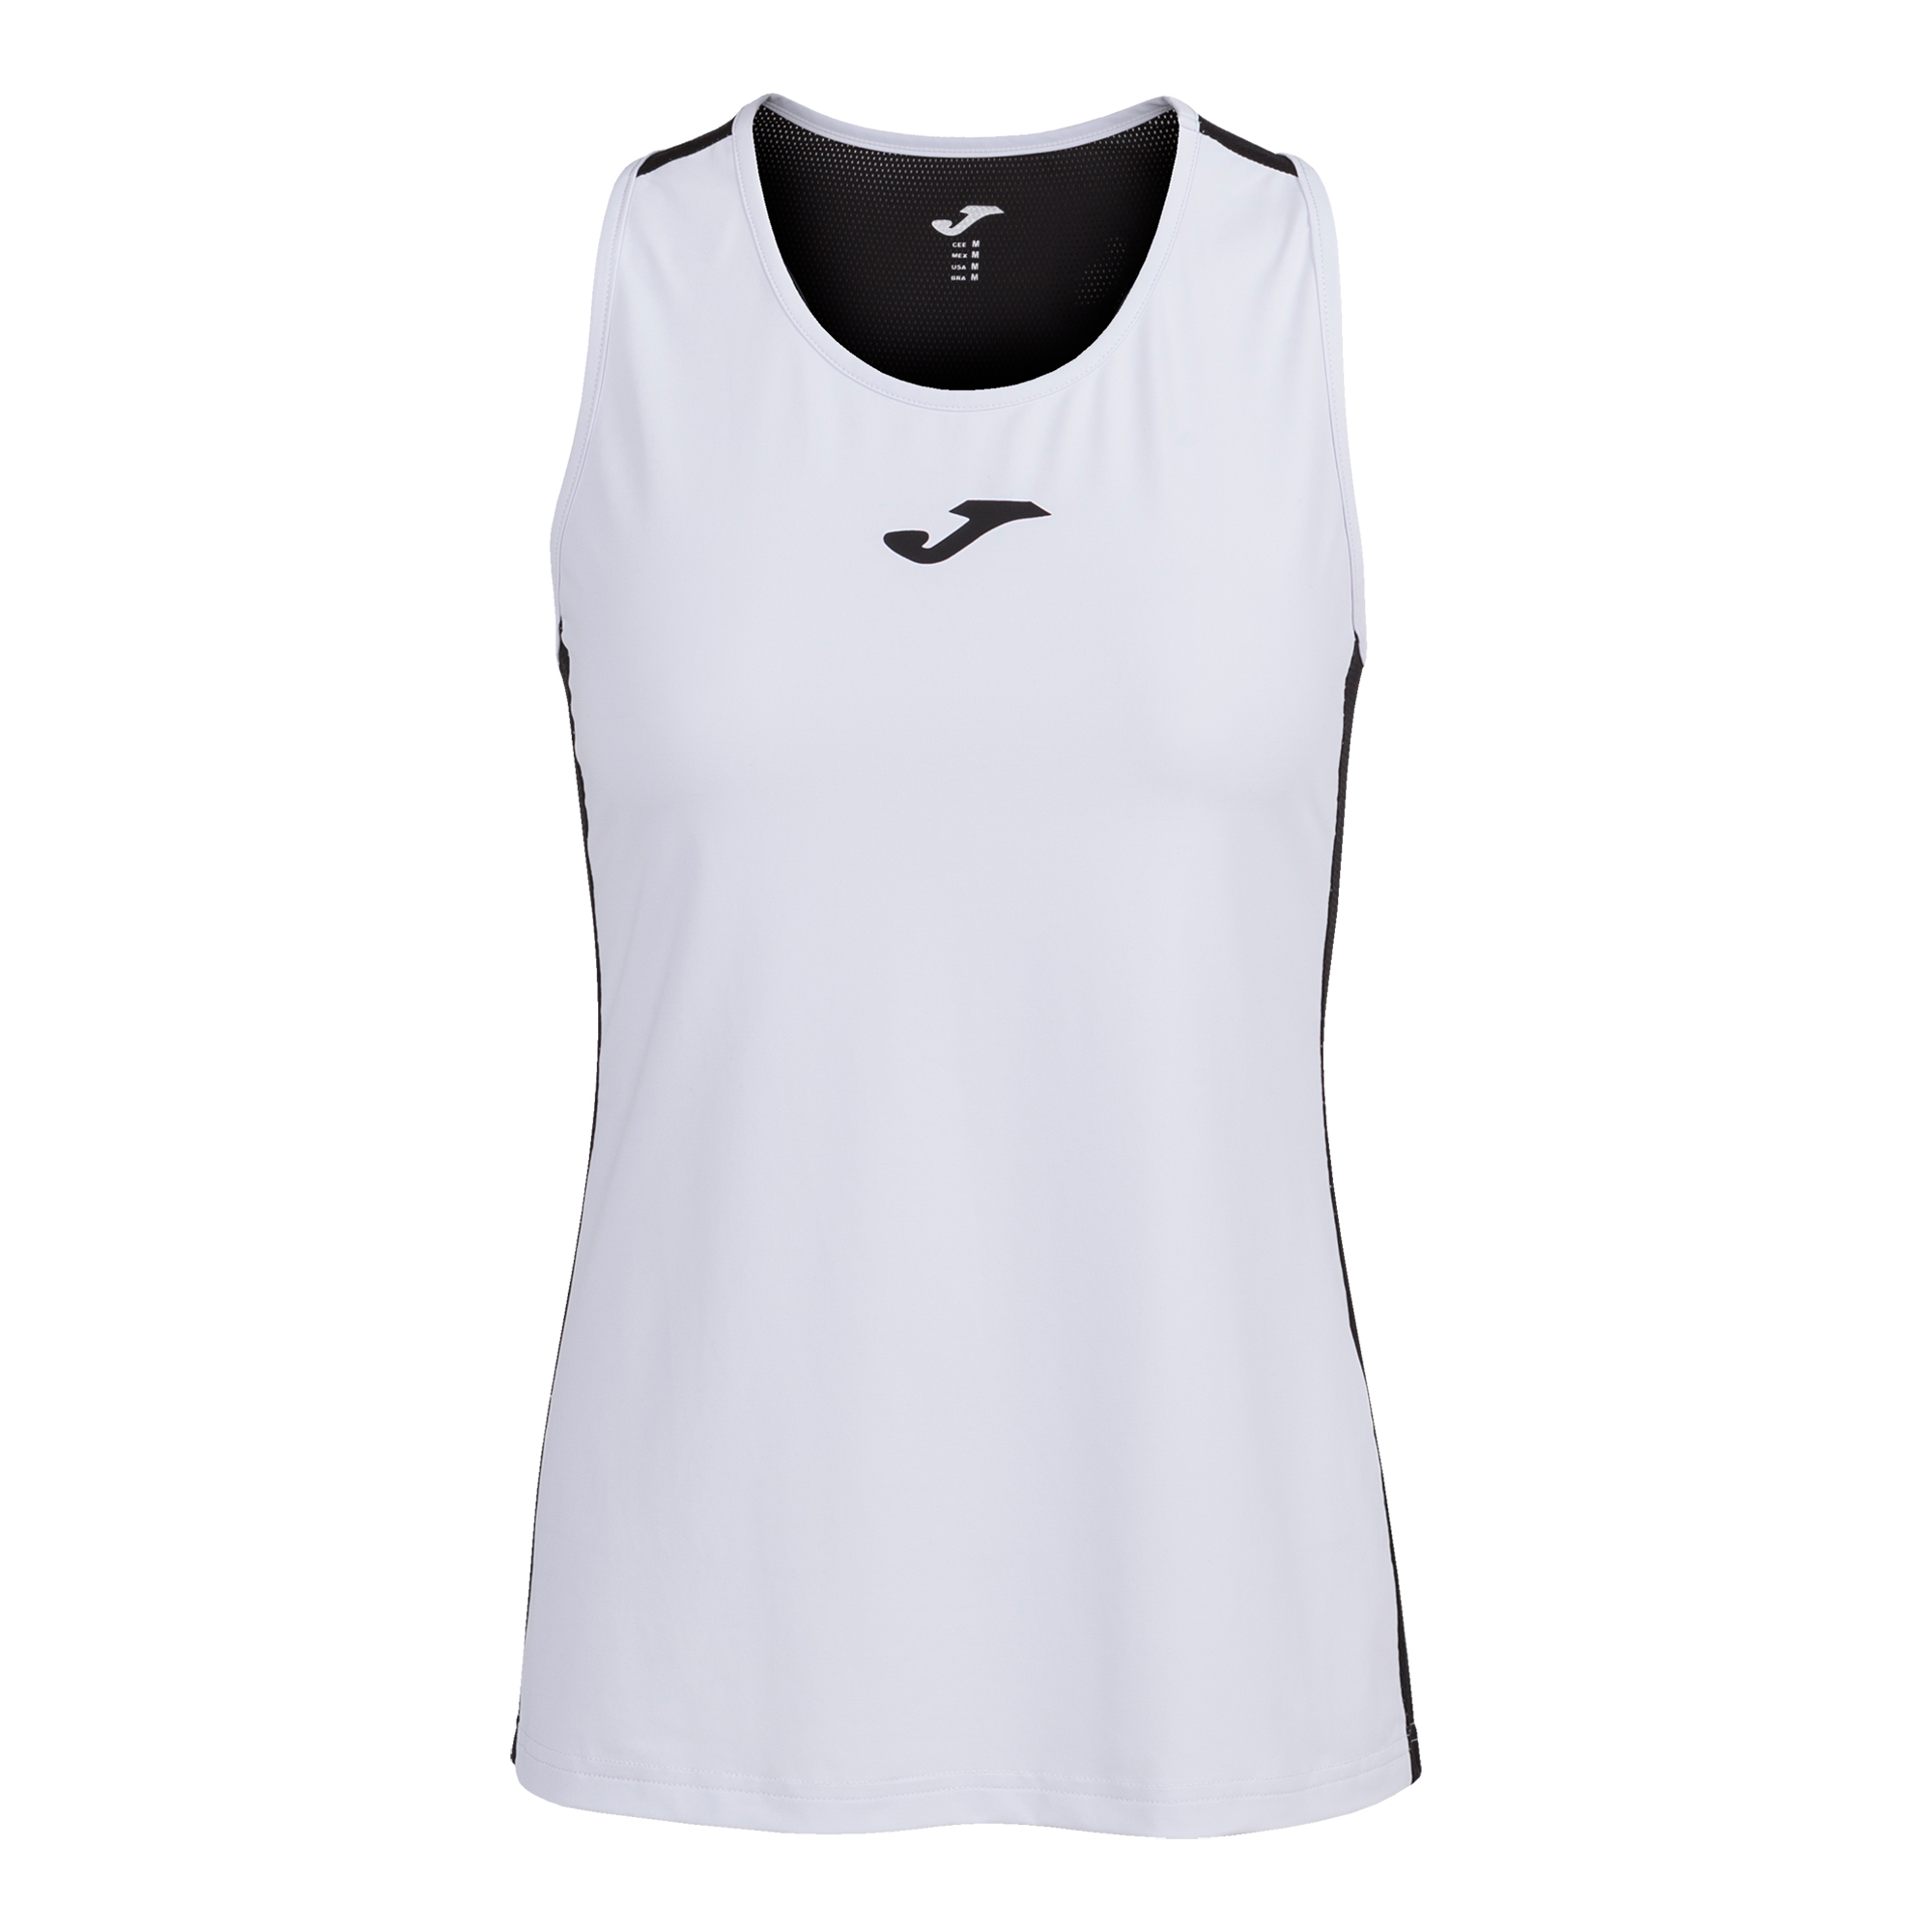 Camiseta Tirantes Joma Mujer Torneo Blanco Negro